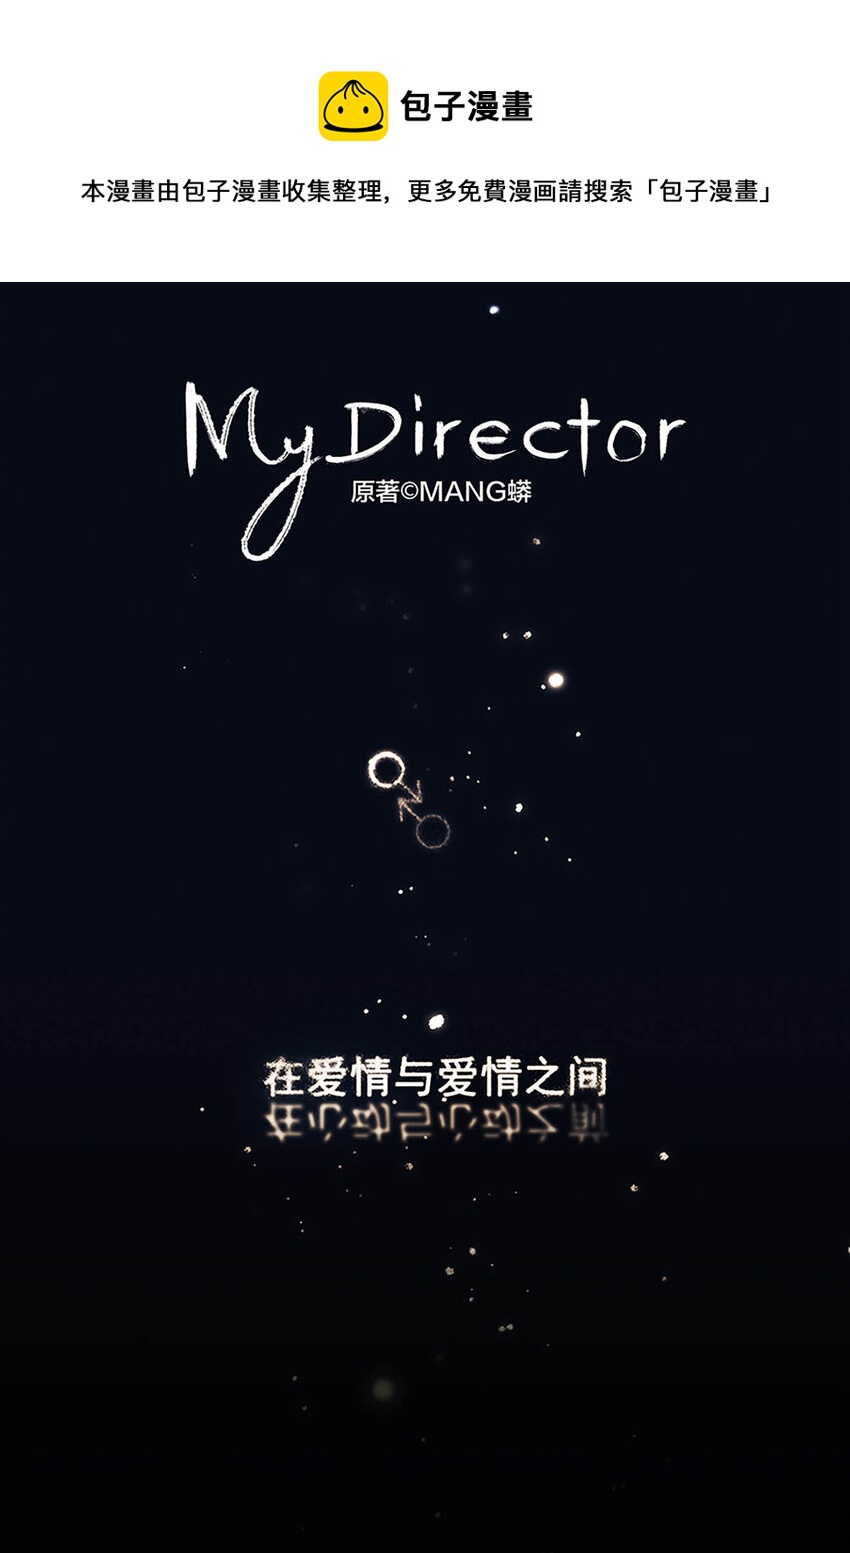 My Director - 005 “我不瞭解你” - 1